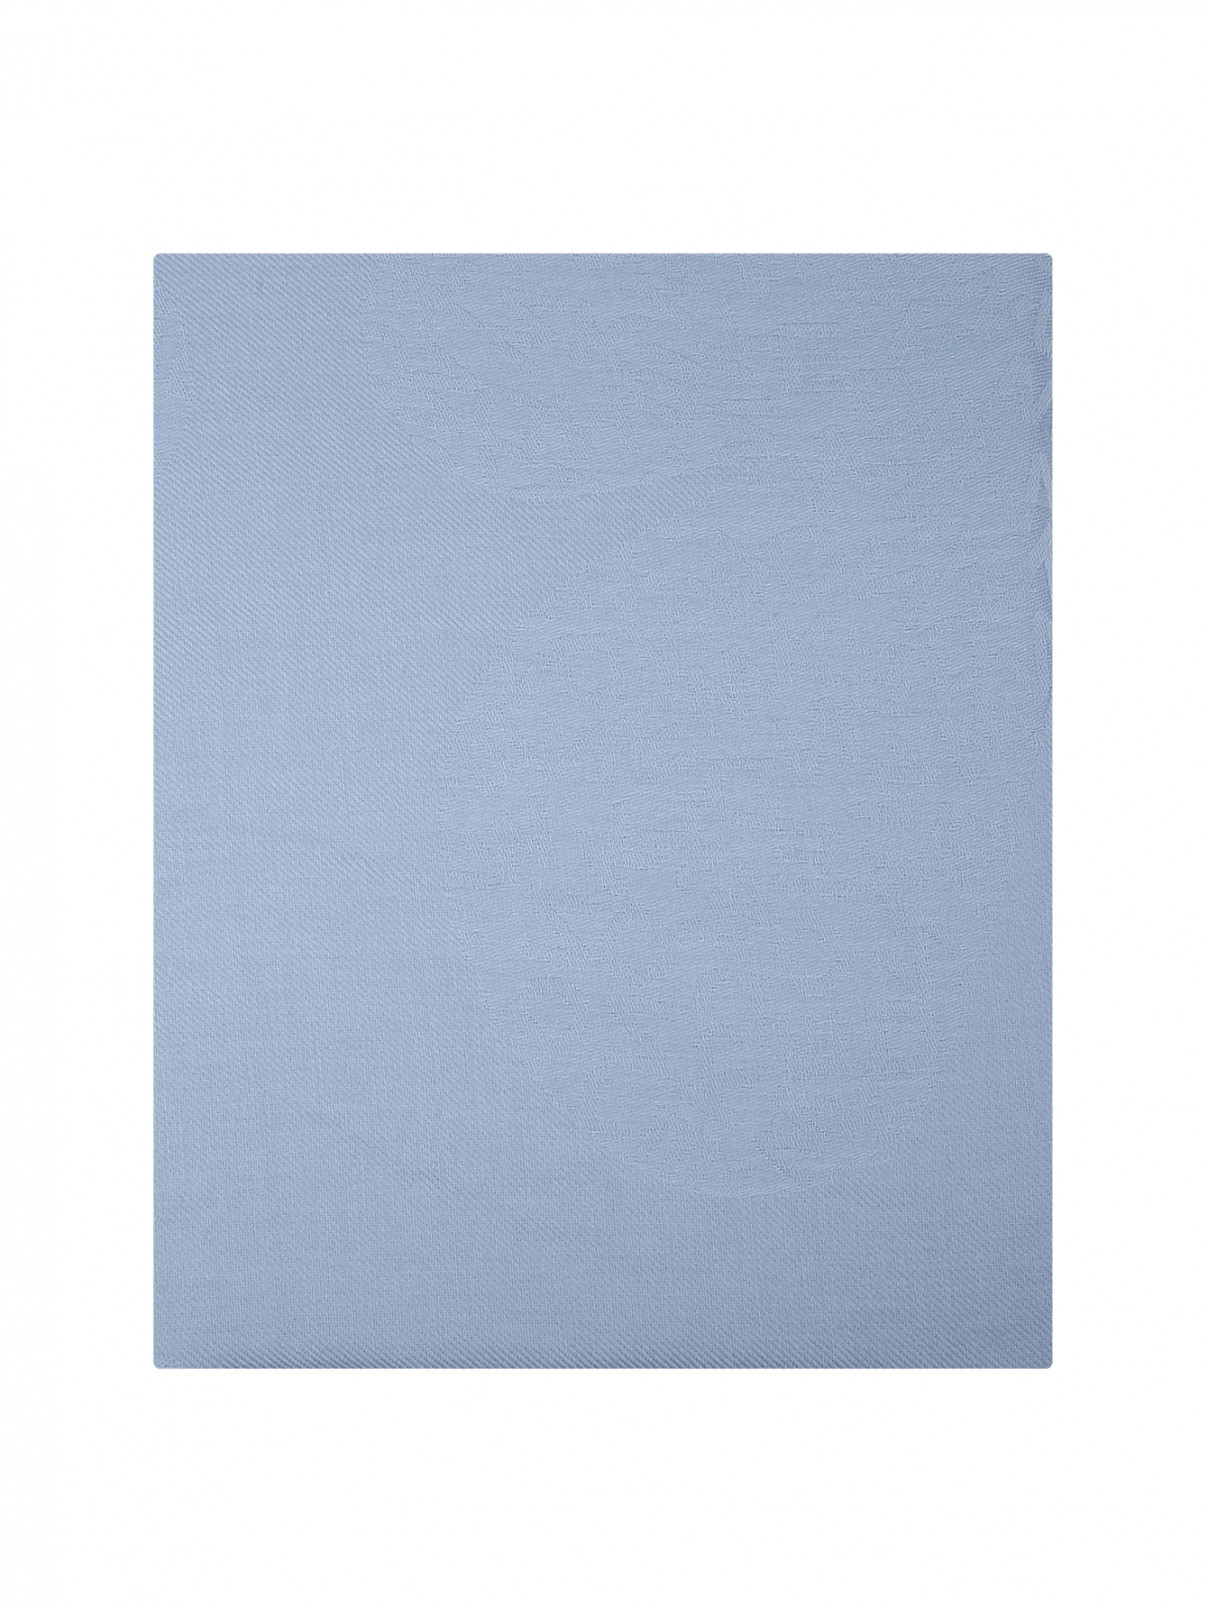 Платок из хлопка с узором Weekend Max Mara  –  Общий вид  – Цвет:  Синий